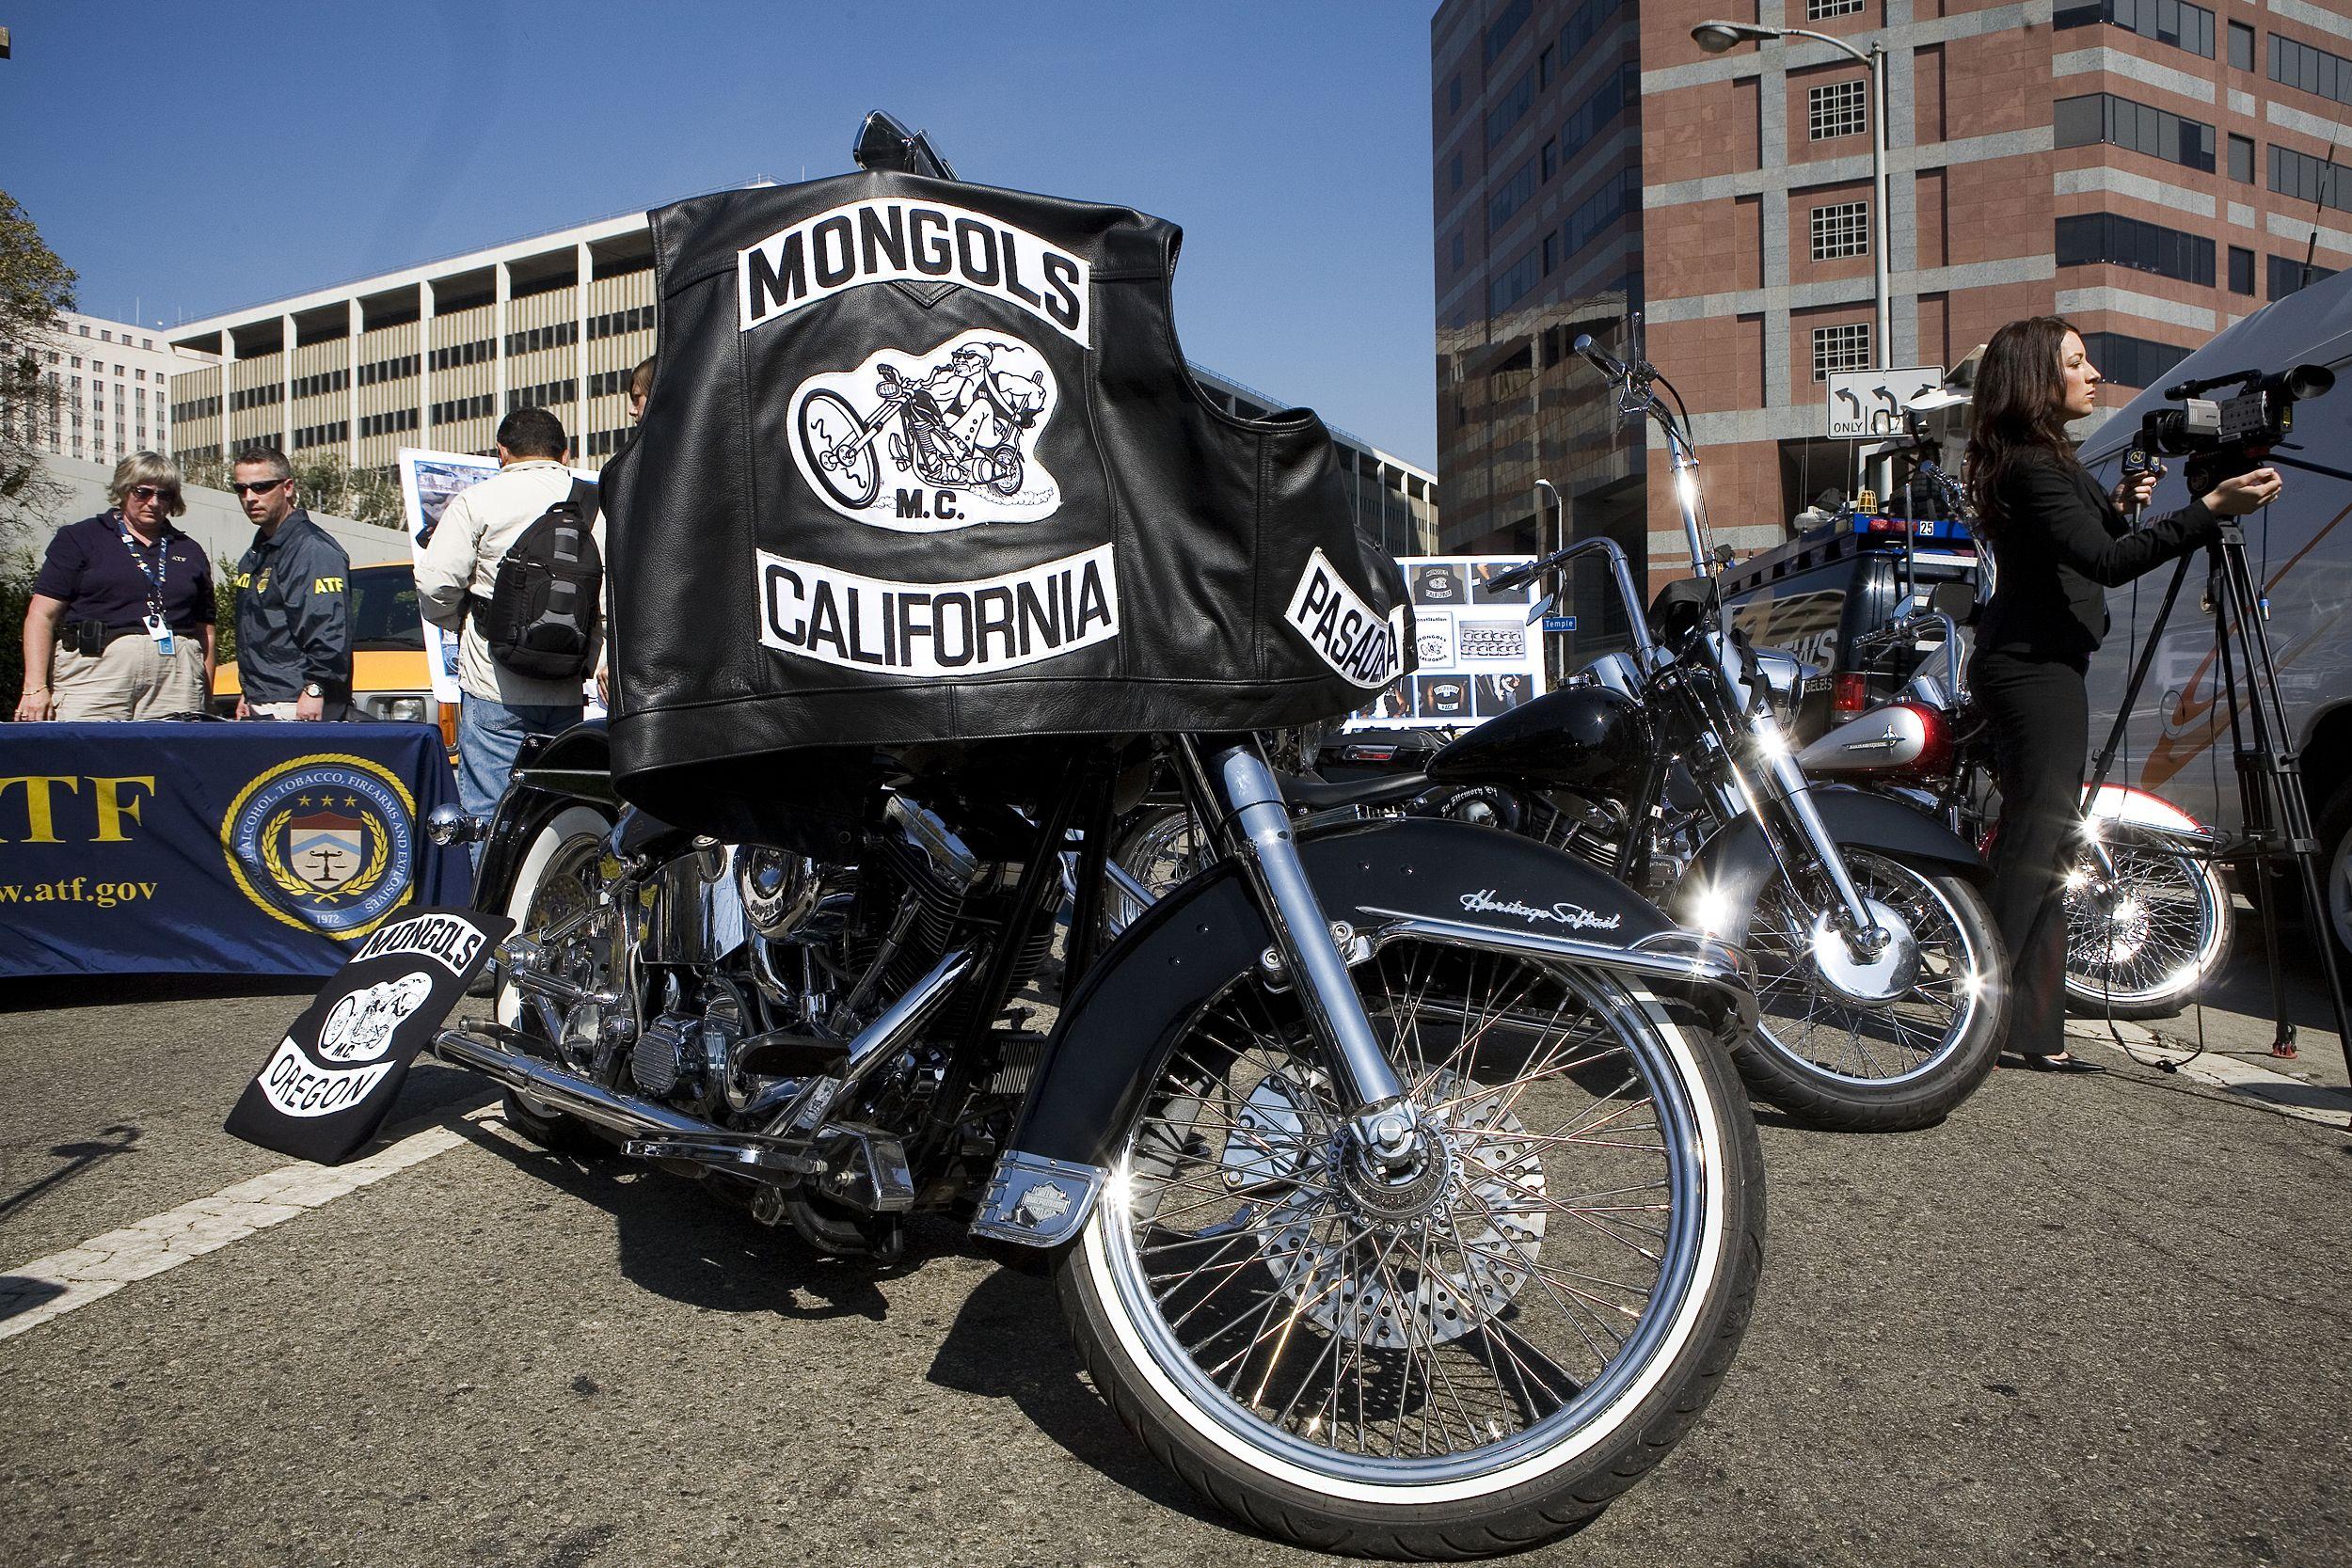 Biker Motorcycle Logo - Jury decides to strip Mongols biker gang of trademark logo